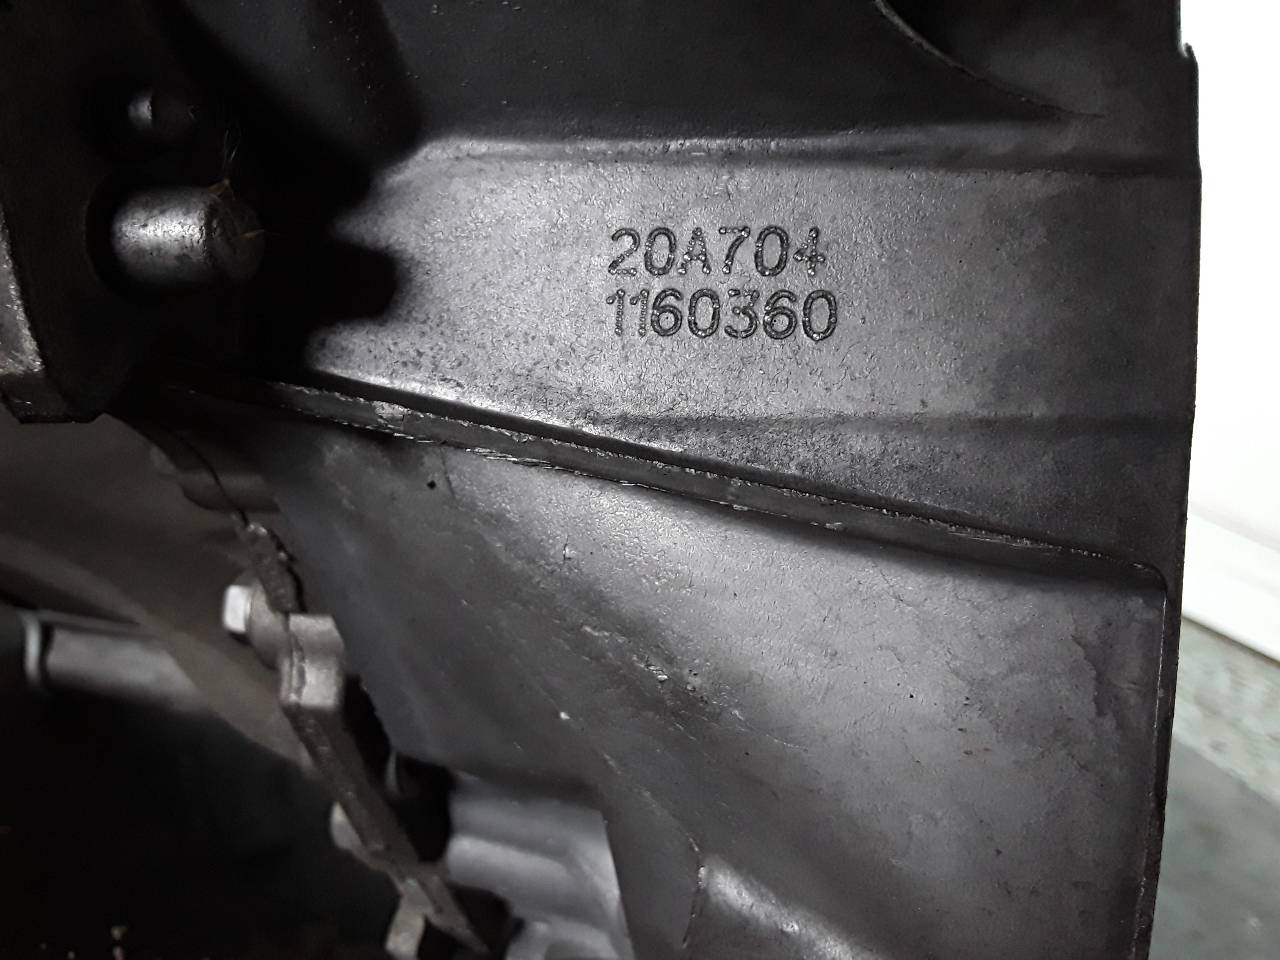 PEUGEOT 208 Peugeot 208 (2012-2015) Gearbox 20A704, 1160360 19017591